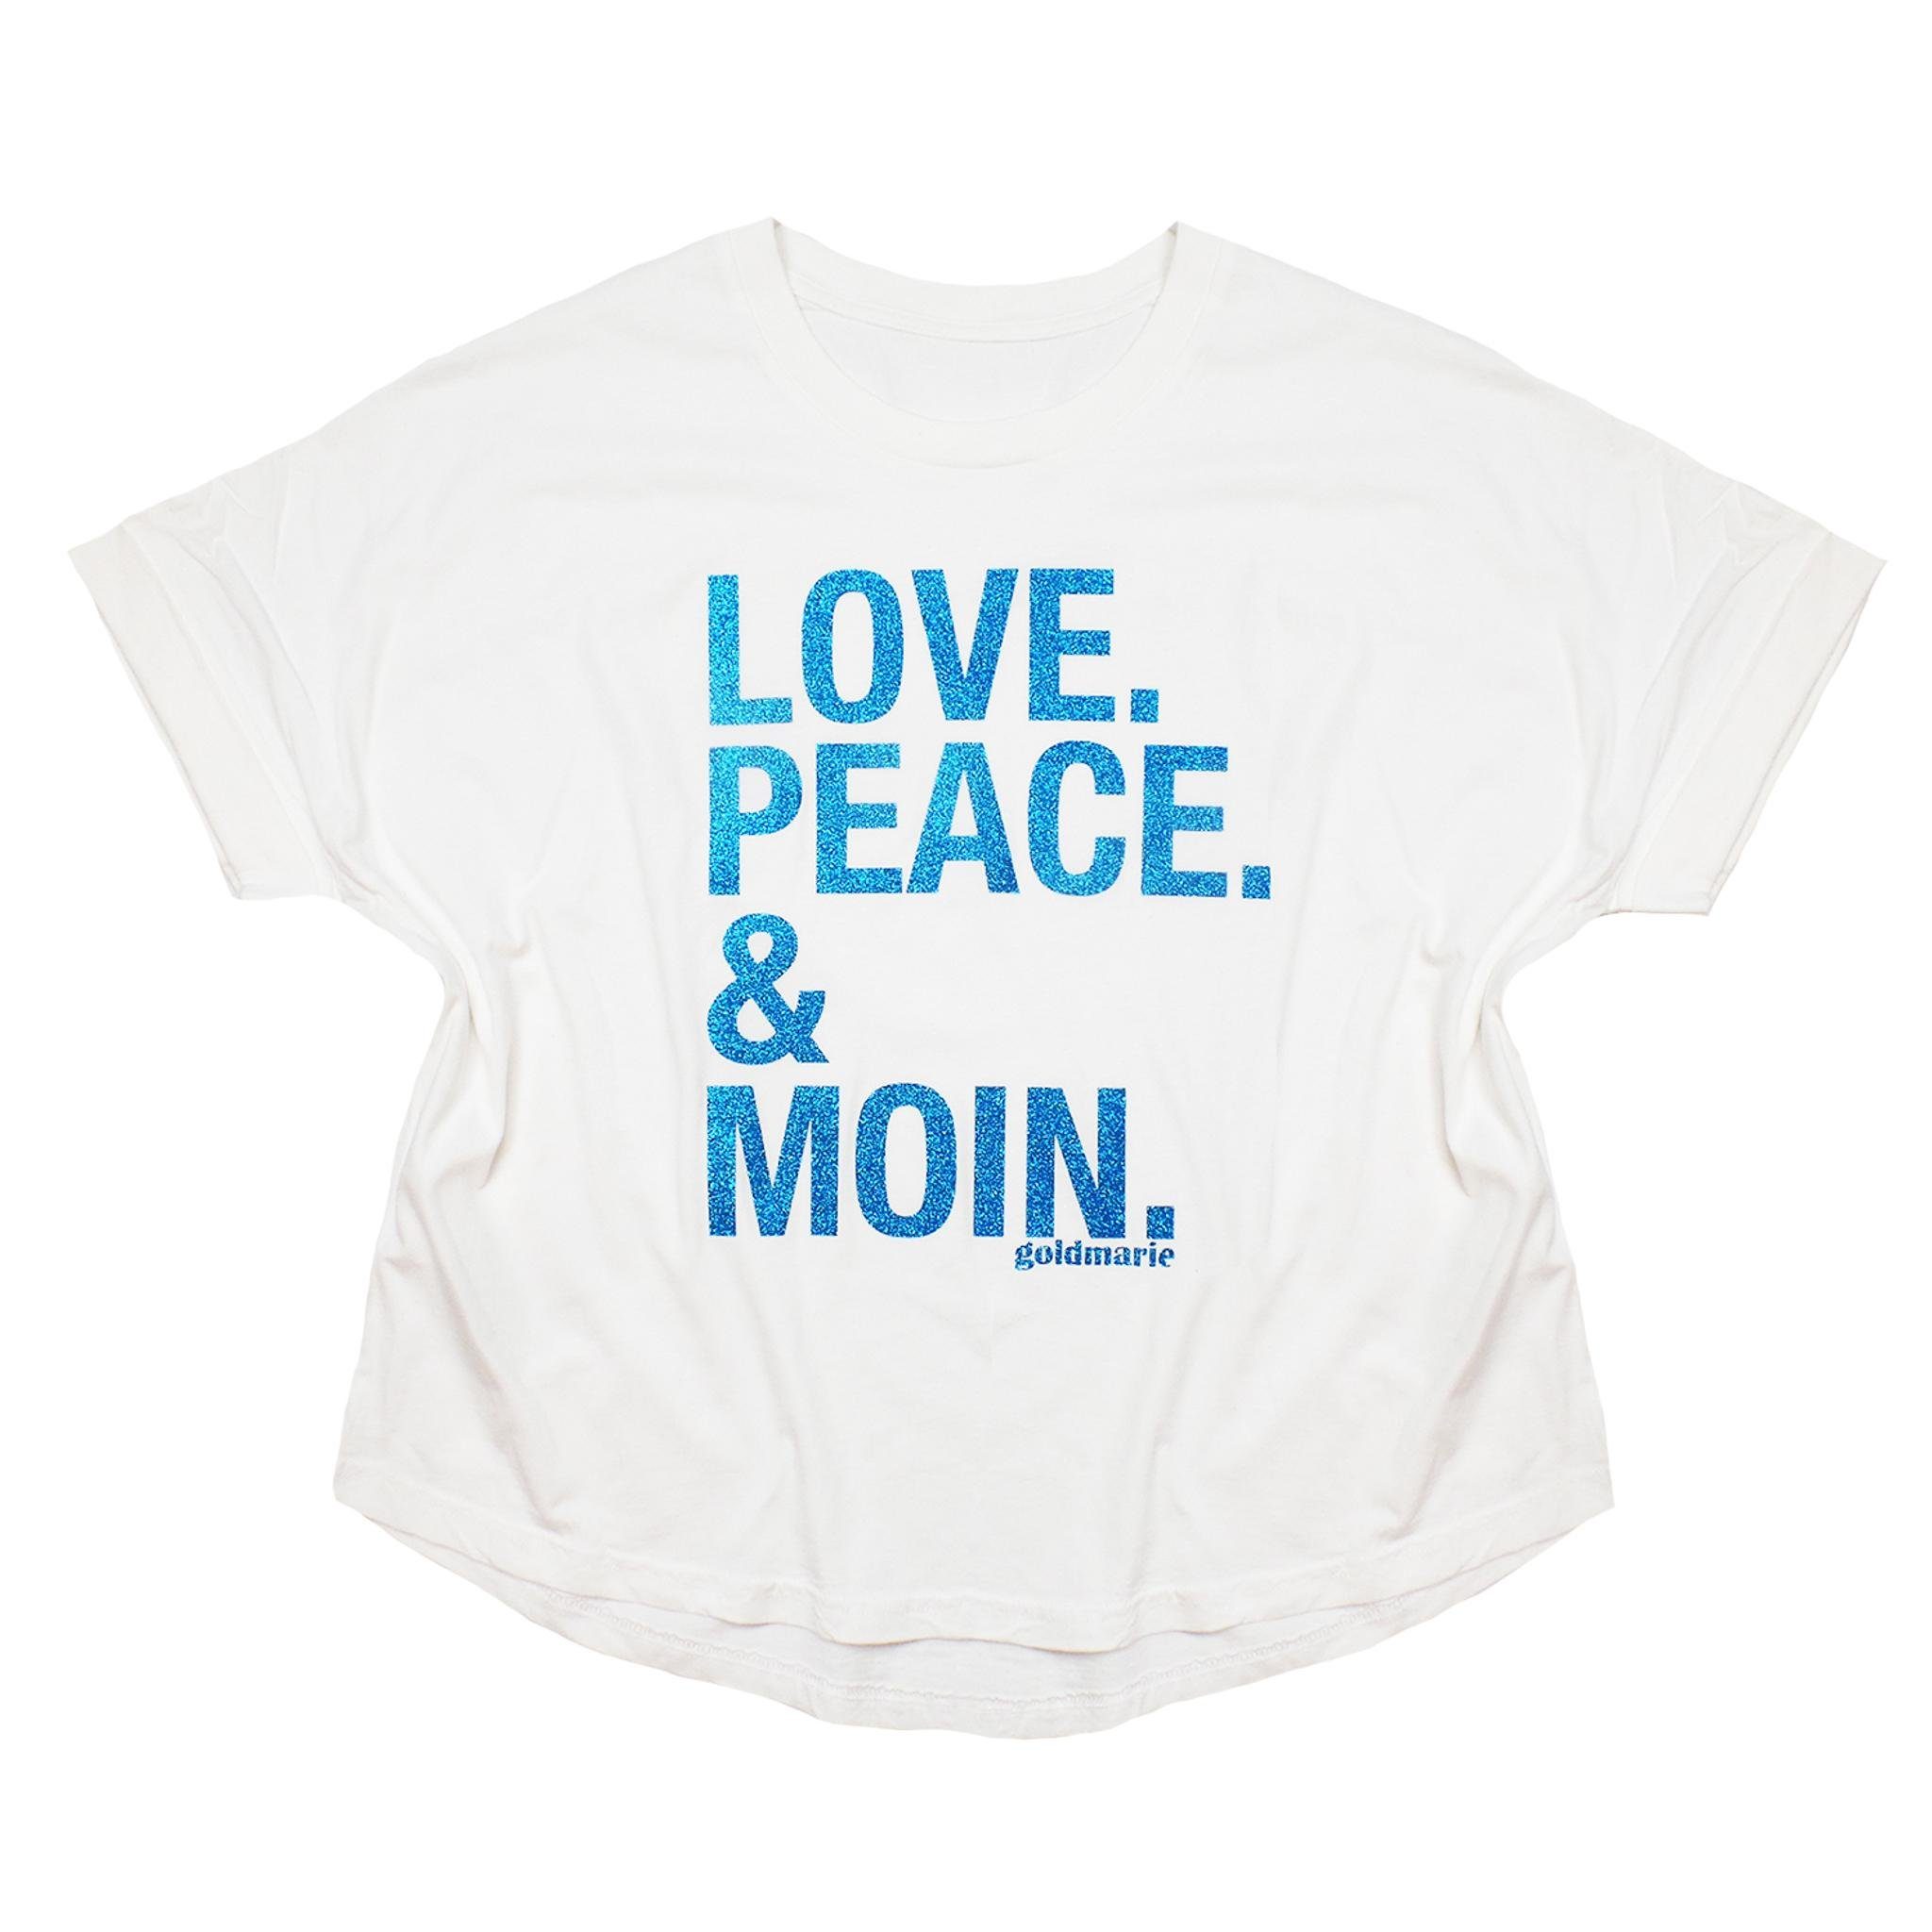 goldmarie T-Shirt LOVE PEACE MOIN Shirt Uschi weiß blau mit Glitzer Baumwolle